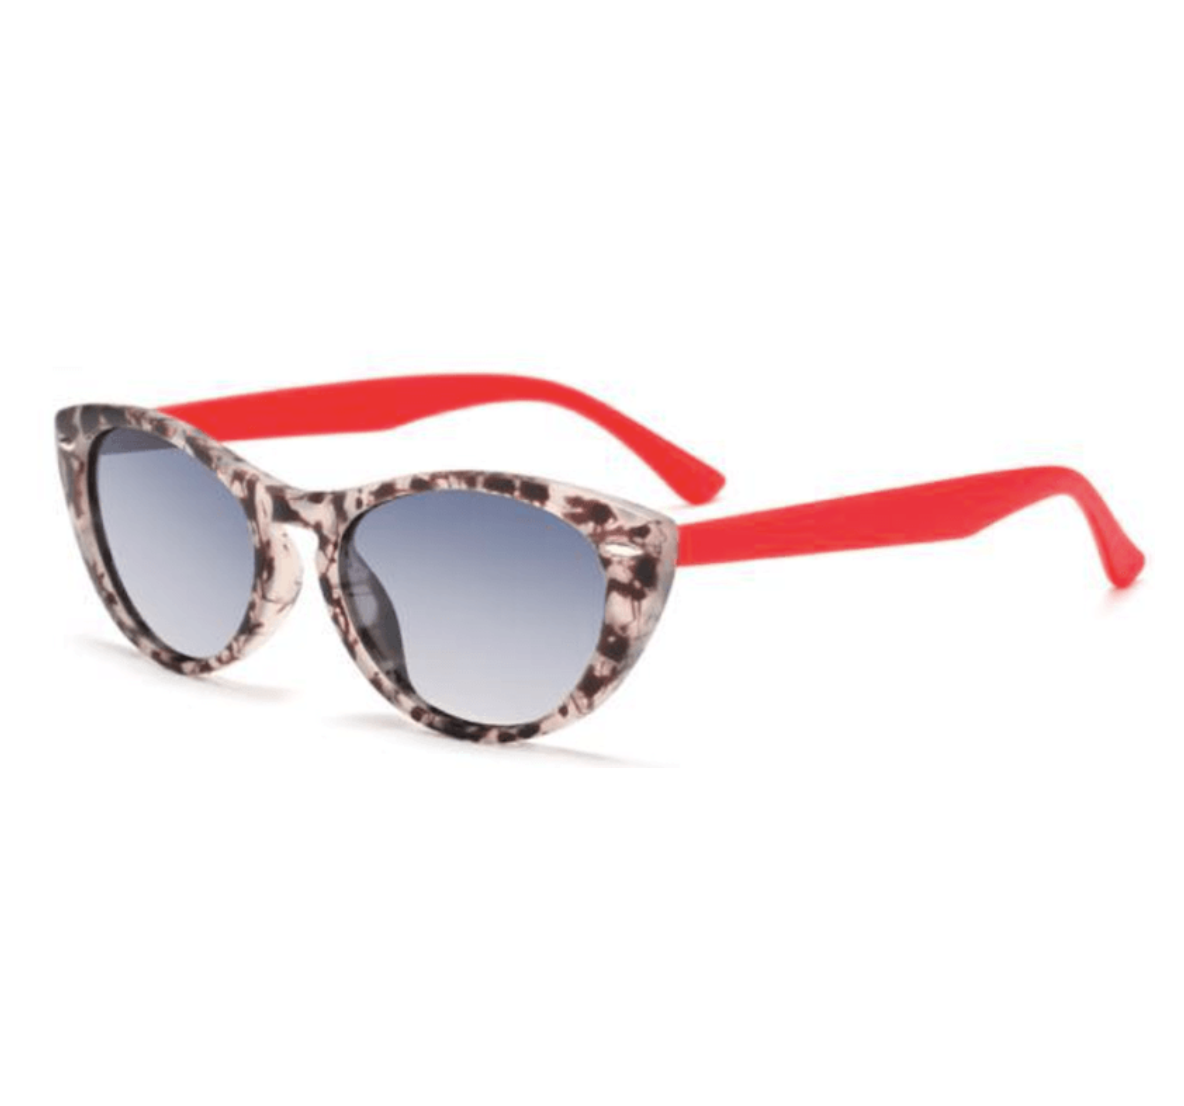 cat eye sunglasses wholesale, mirrored cat eye sunglasses, Mirrored Cateye Sunglasses, sunglasses wholesale vendors